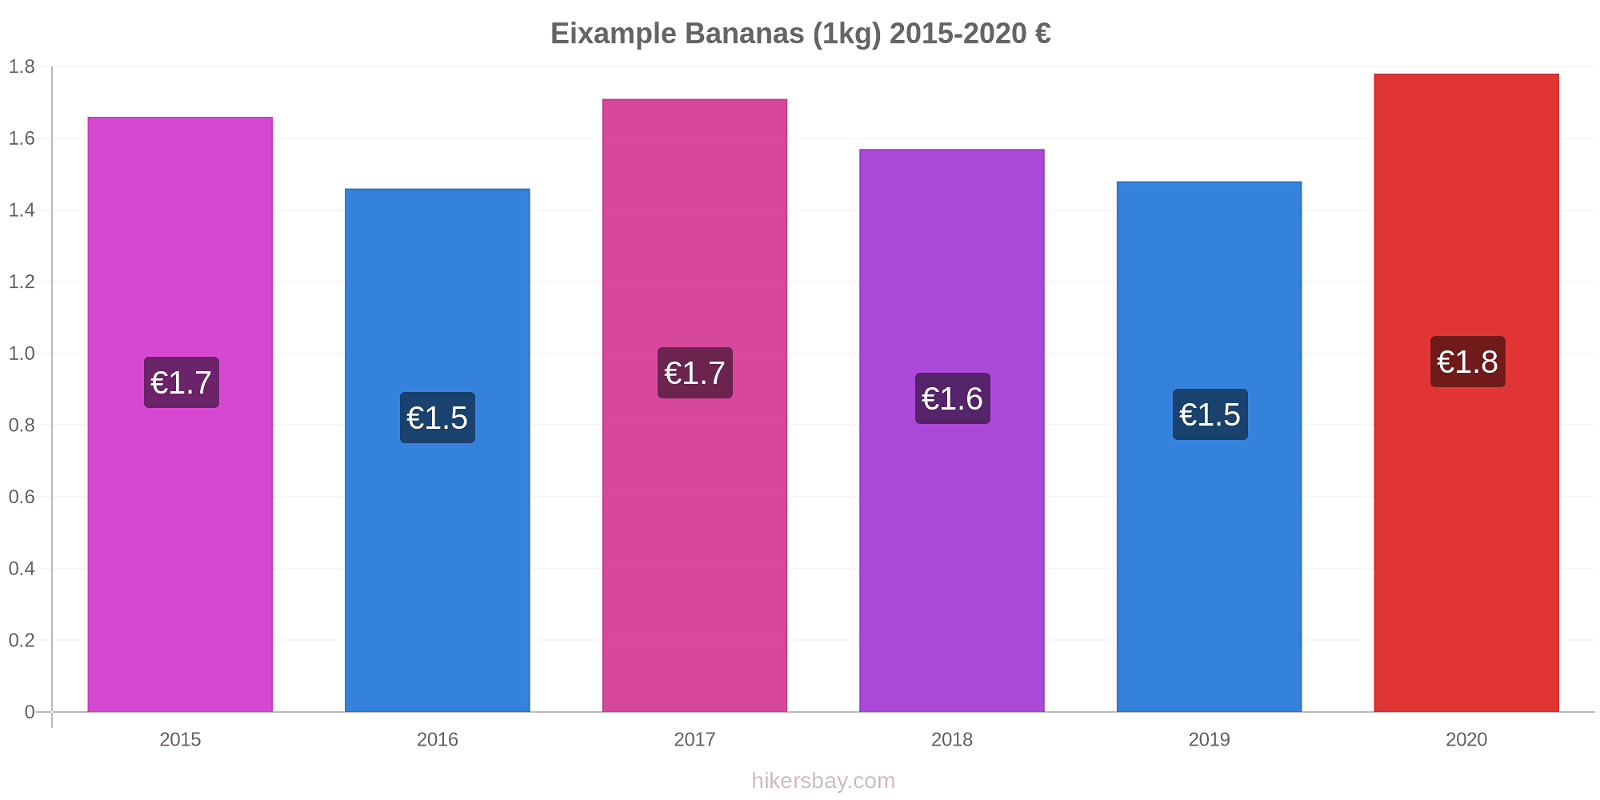 Eixample price changes Bananas (1kg) hikersbay.com